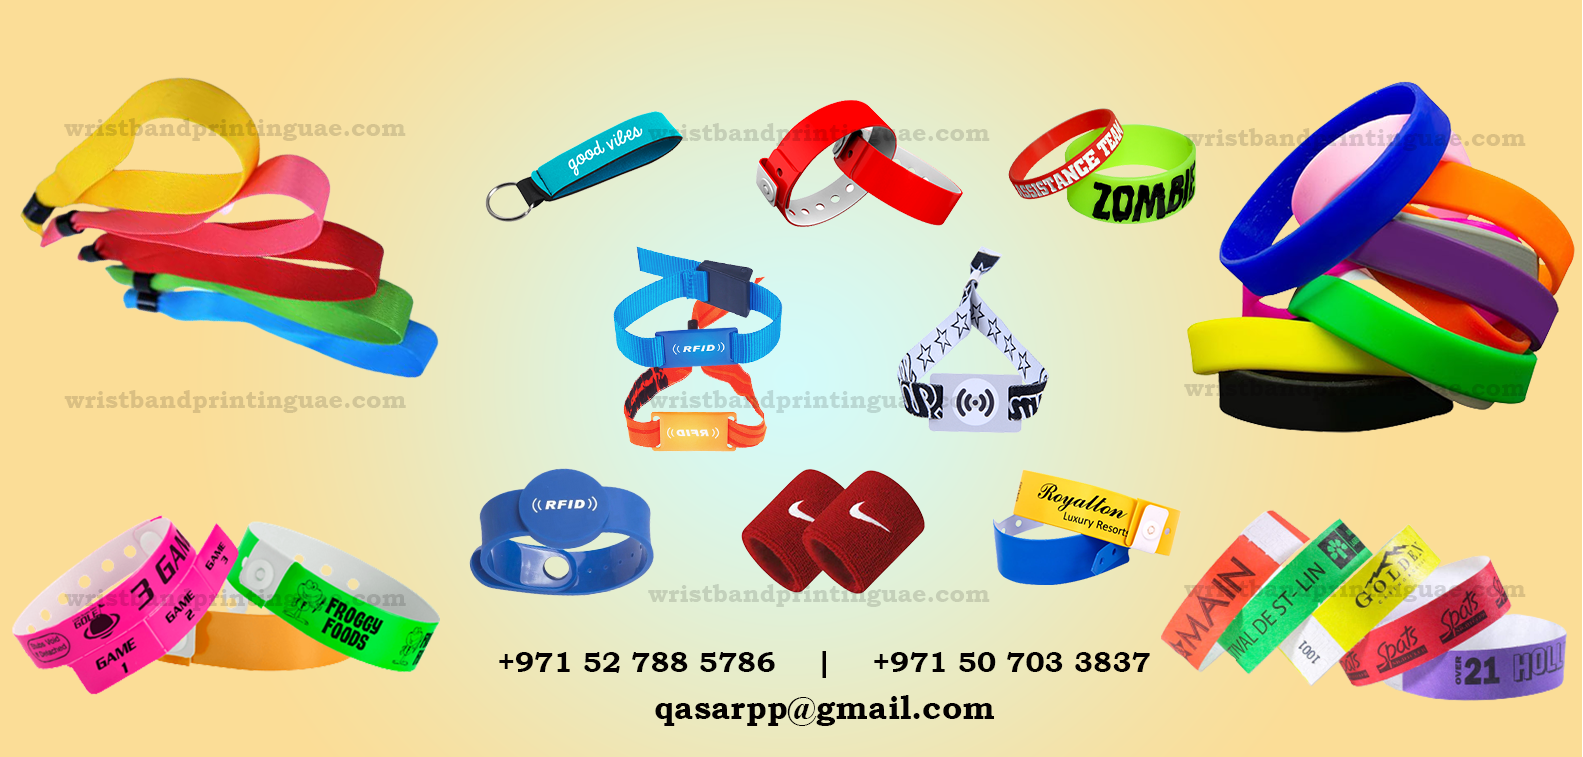 Best-Customized-Wristband-Printing-Manufacture-Suppliers-in-Dubai-Sharjah-Ajman-Abudhabi-UAE-Middle-East